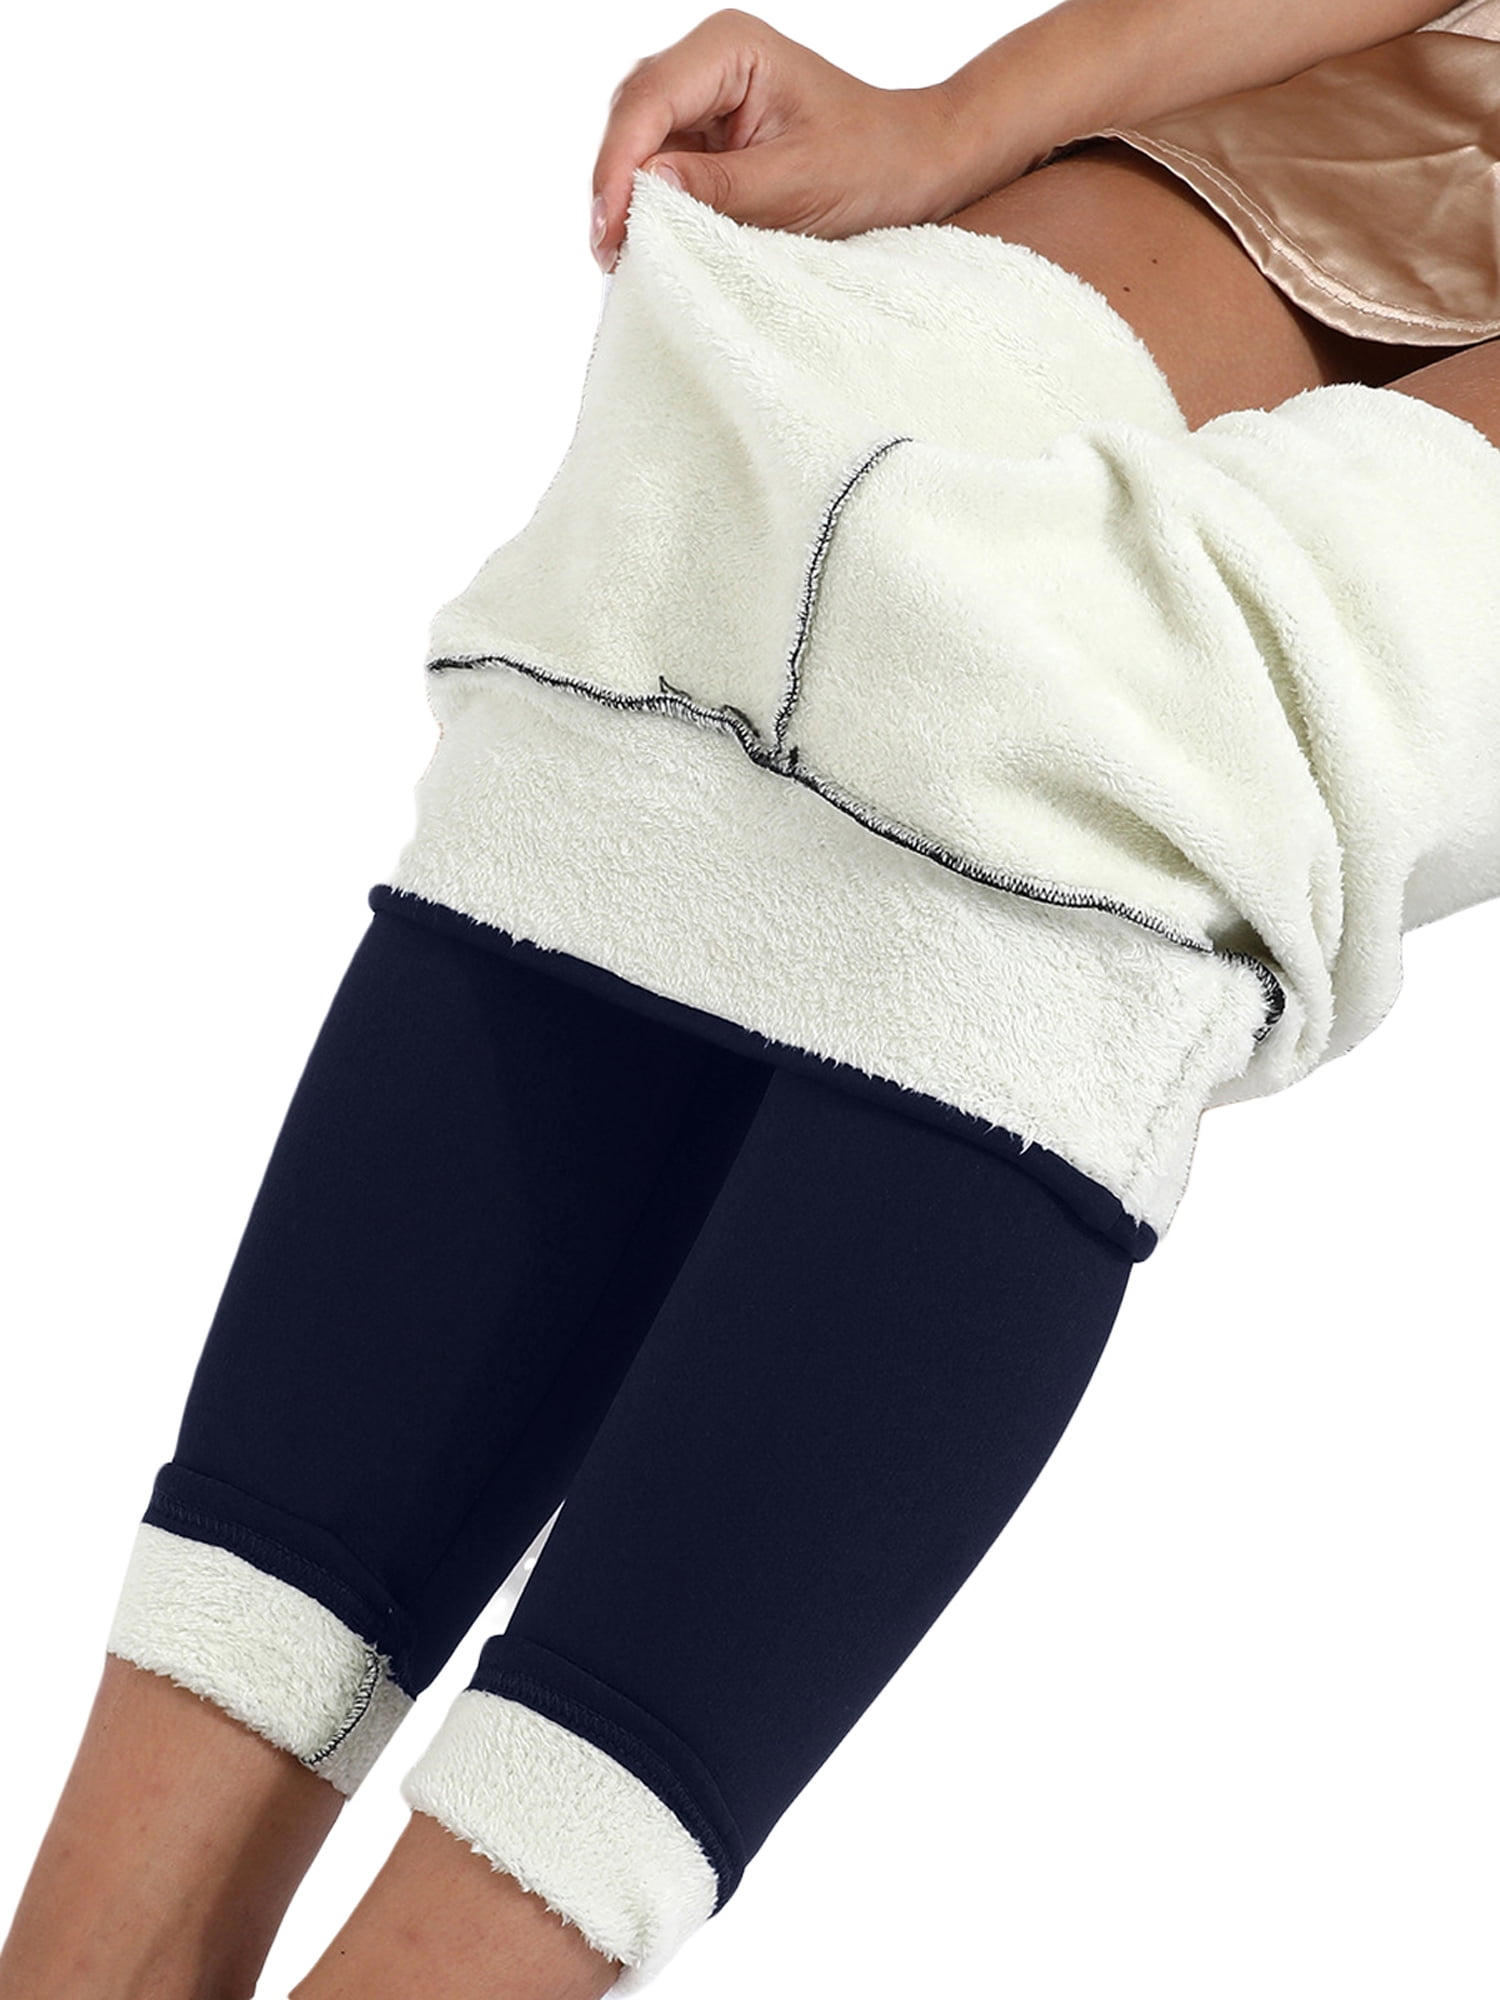 Canrulo Women's Fleece Lined Leggings Thermal Warm High Waist Slim